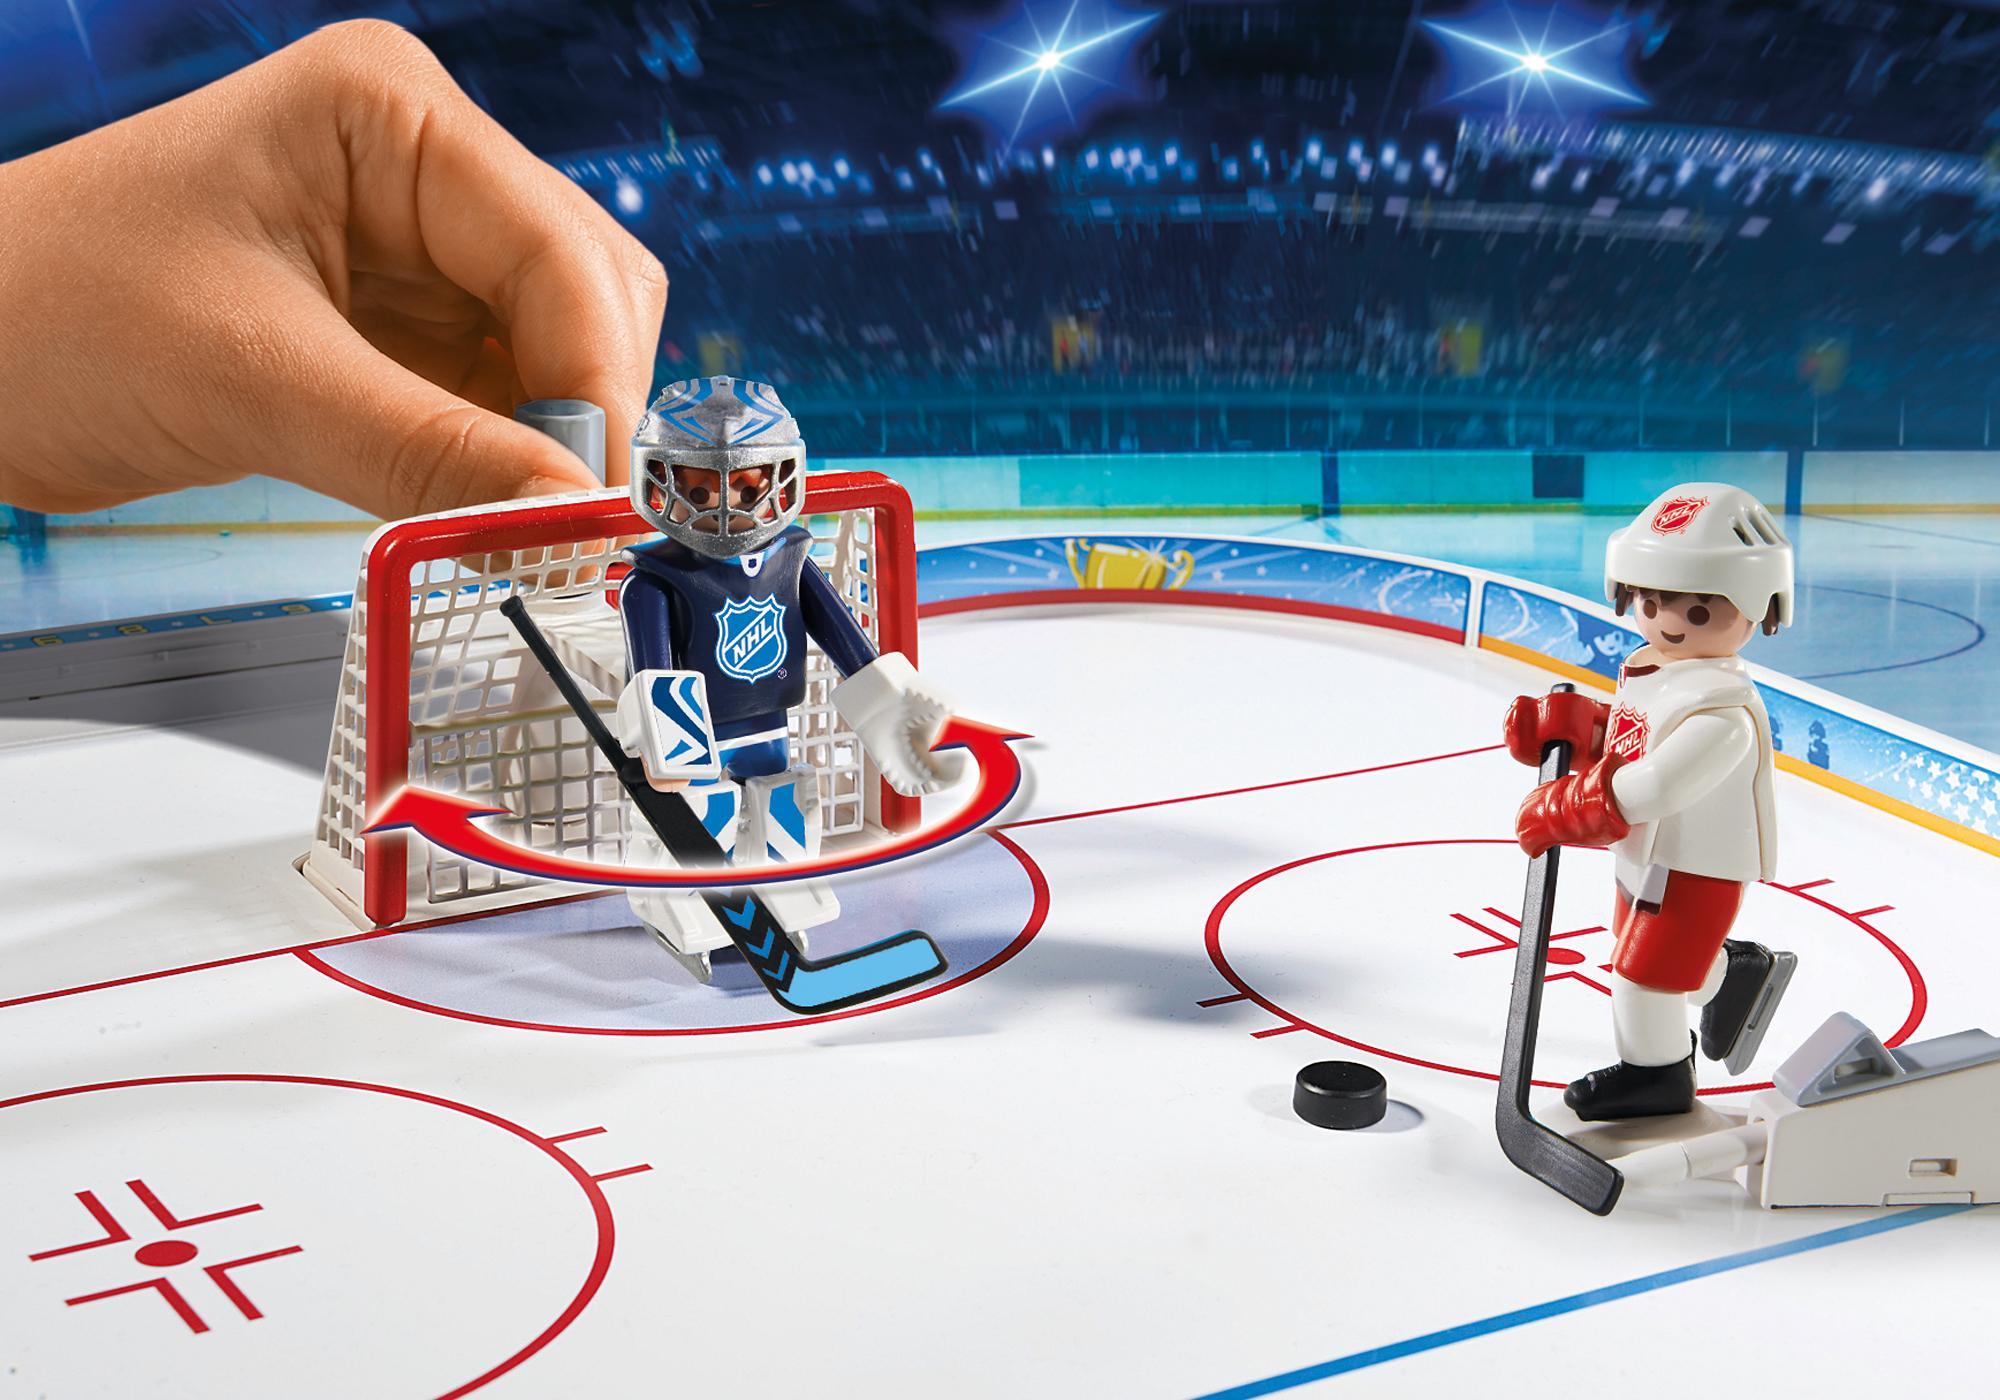 Playmobil NHL - Take Along Arena